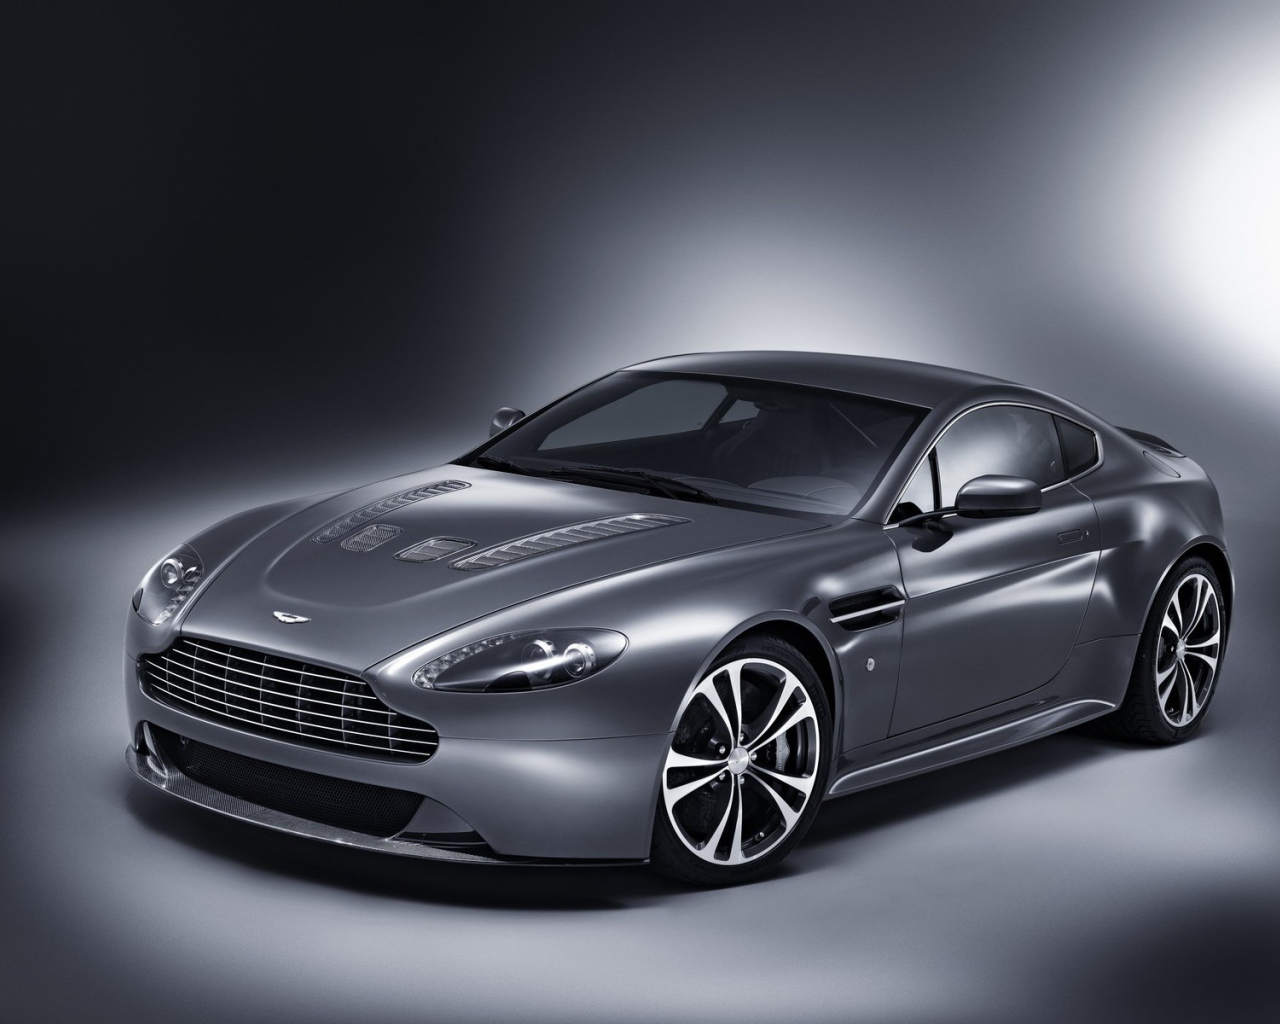 Дизайн автомобиля Aston Martin v8 vantage